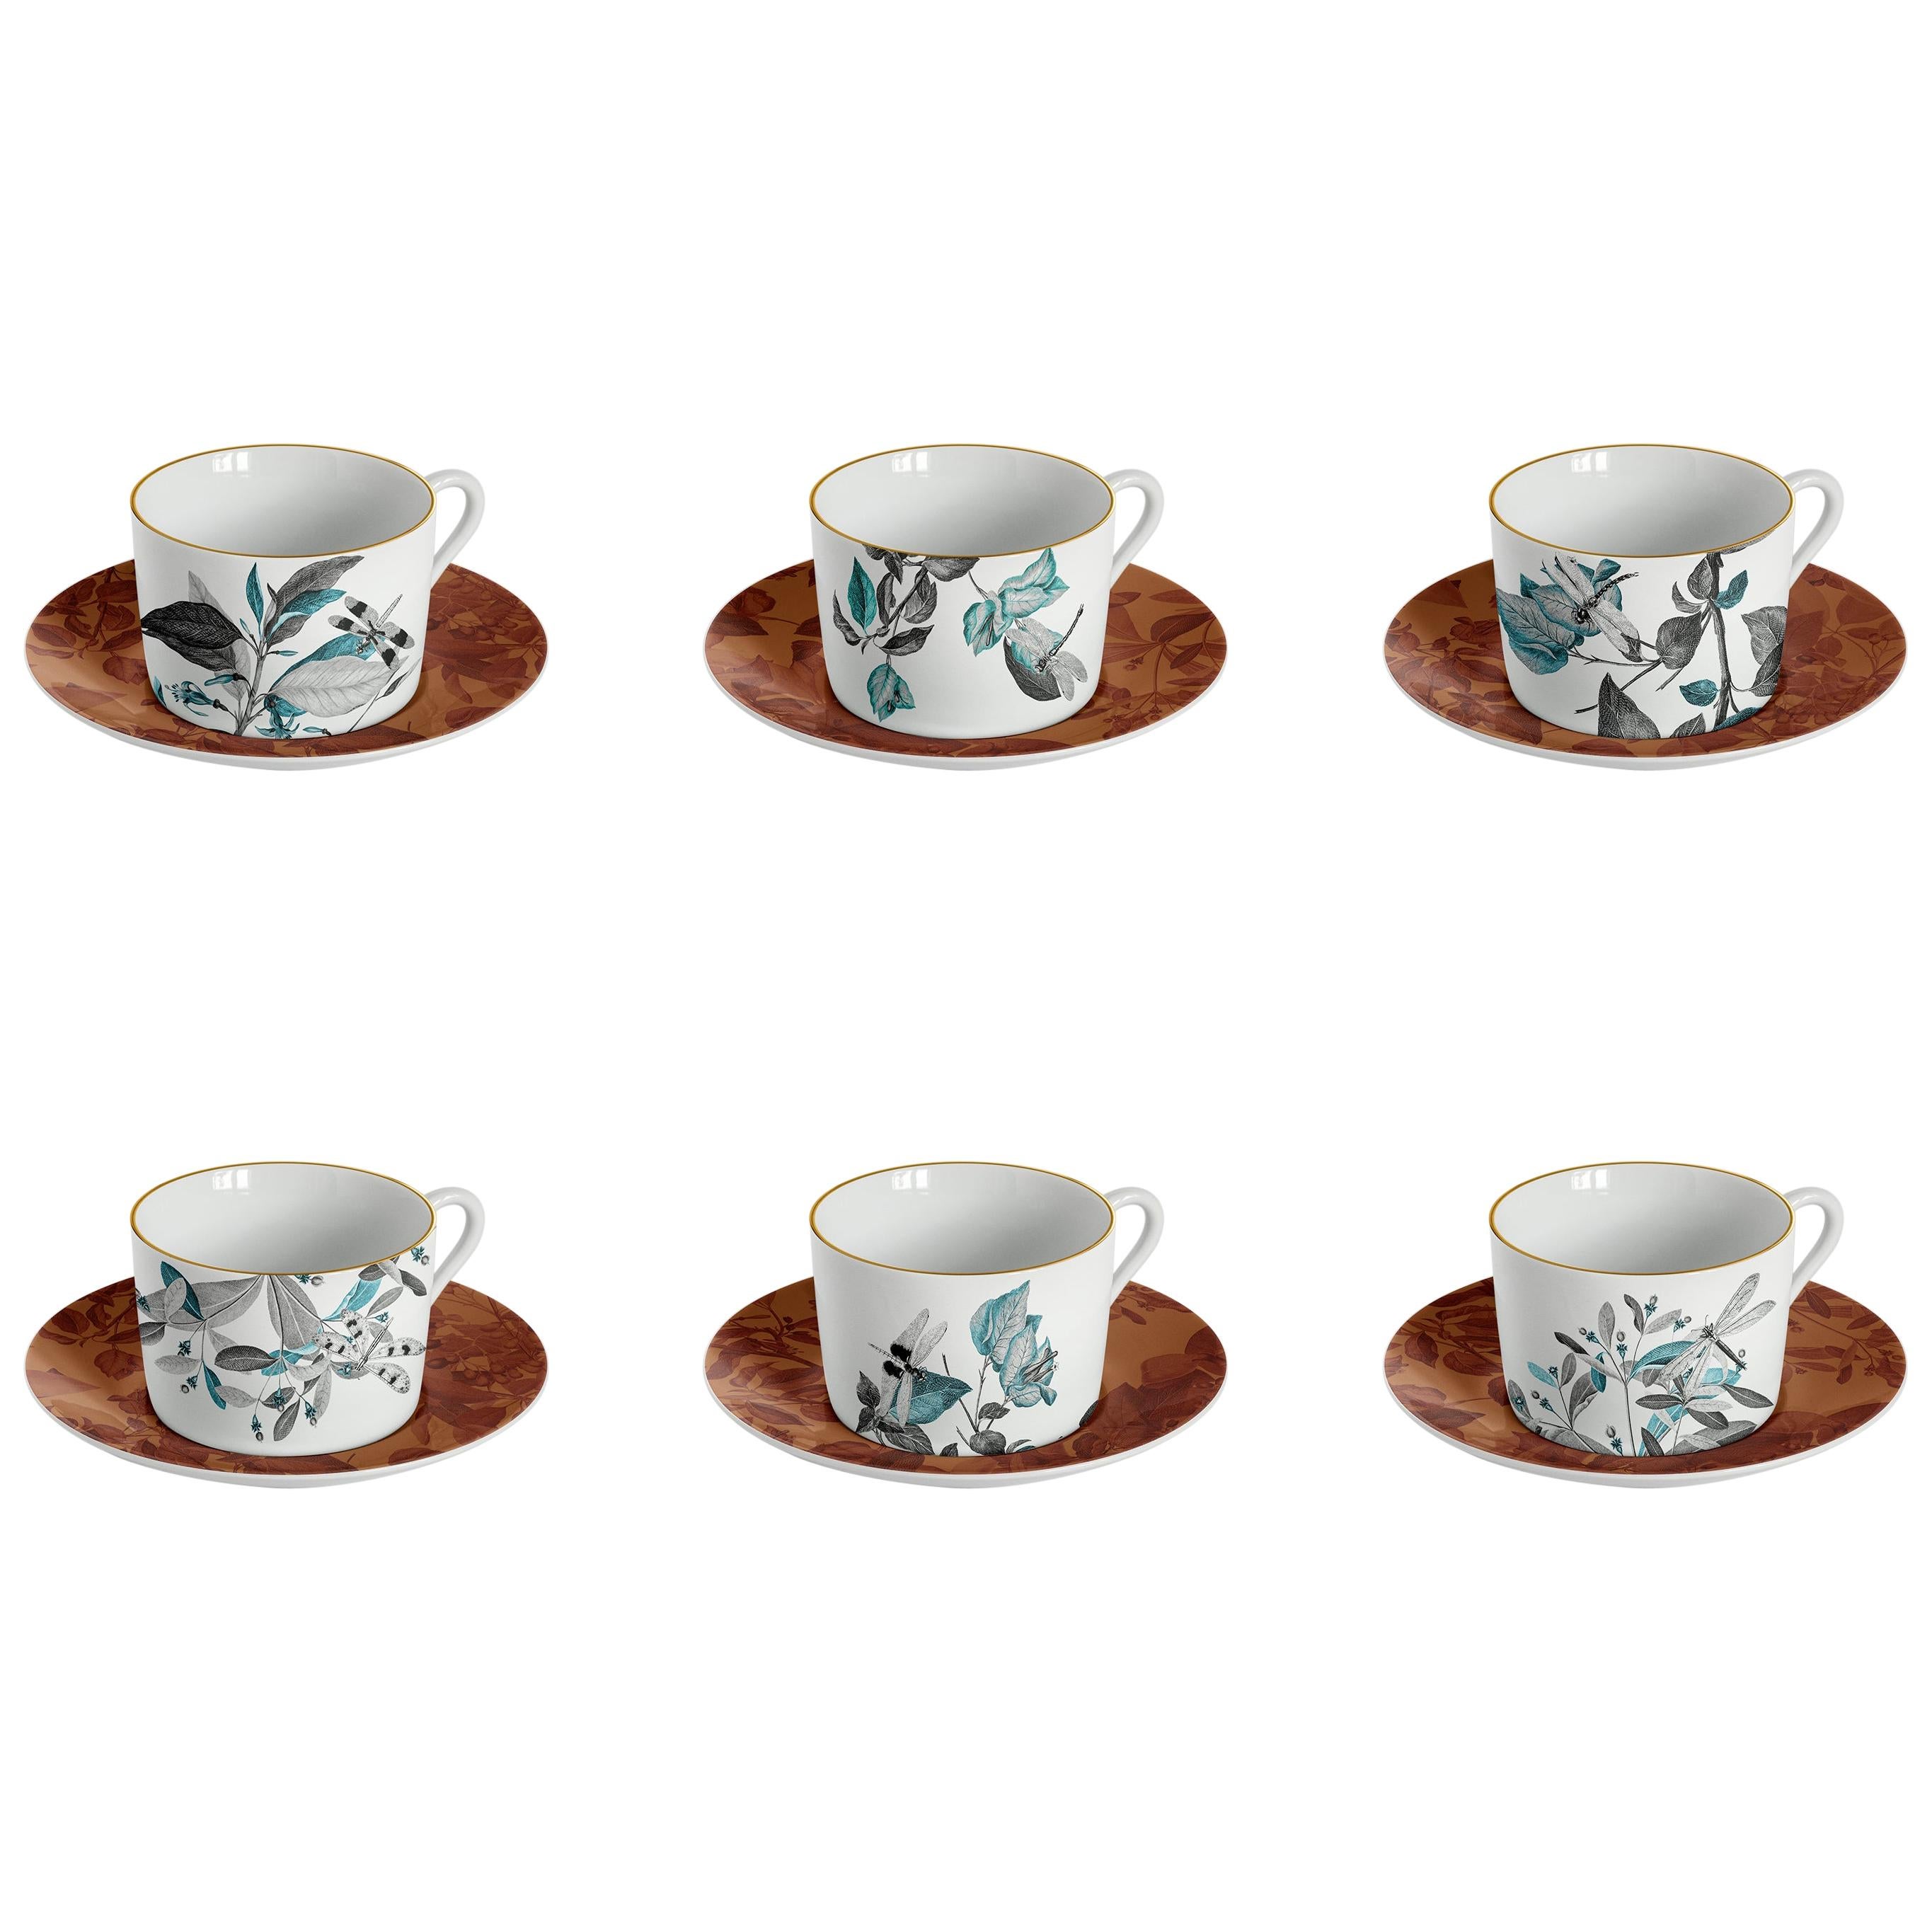 Black Dragon, Tea Set with Six Contemporary Porcelains with Decorative Design For Sale